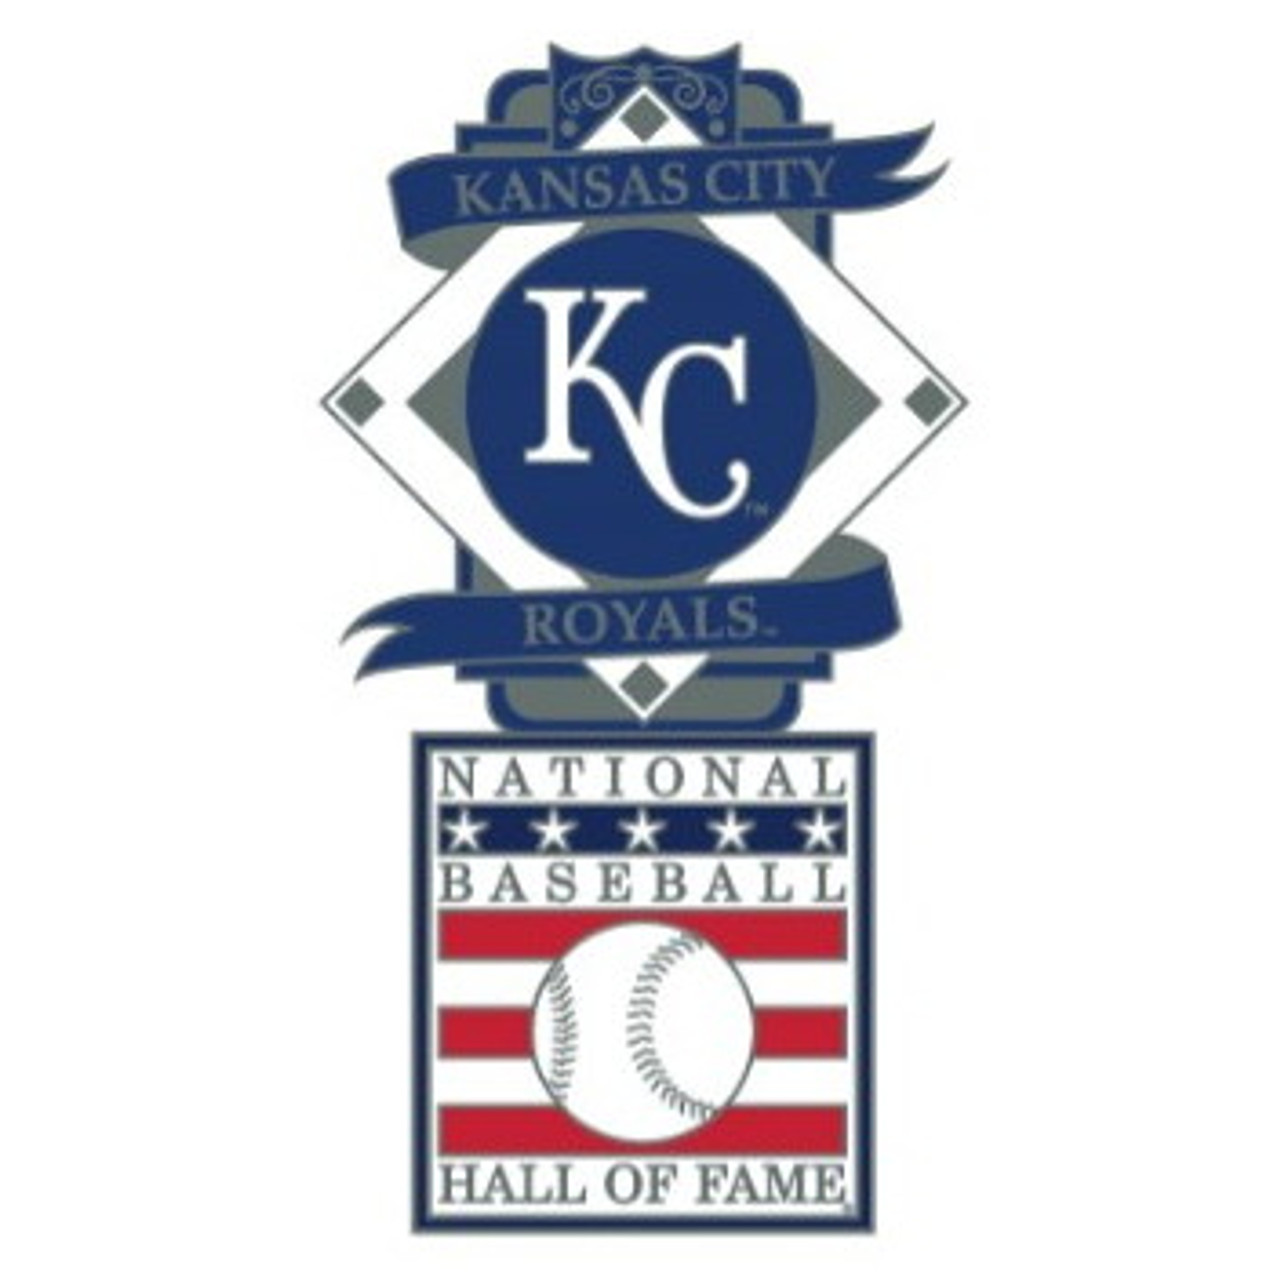 Kansas City Royals Baseball Hall of Fame Logo Exclusive Collector's Pin